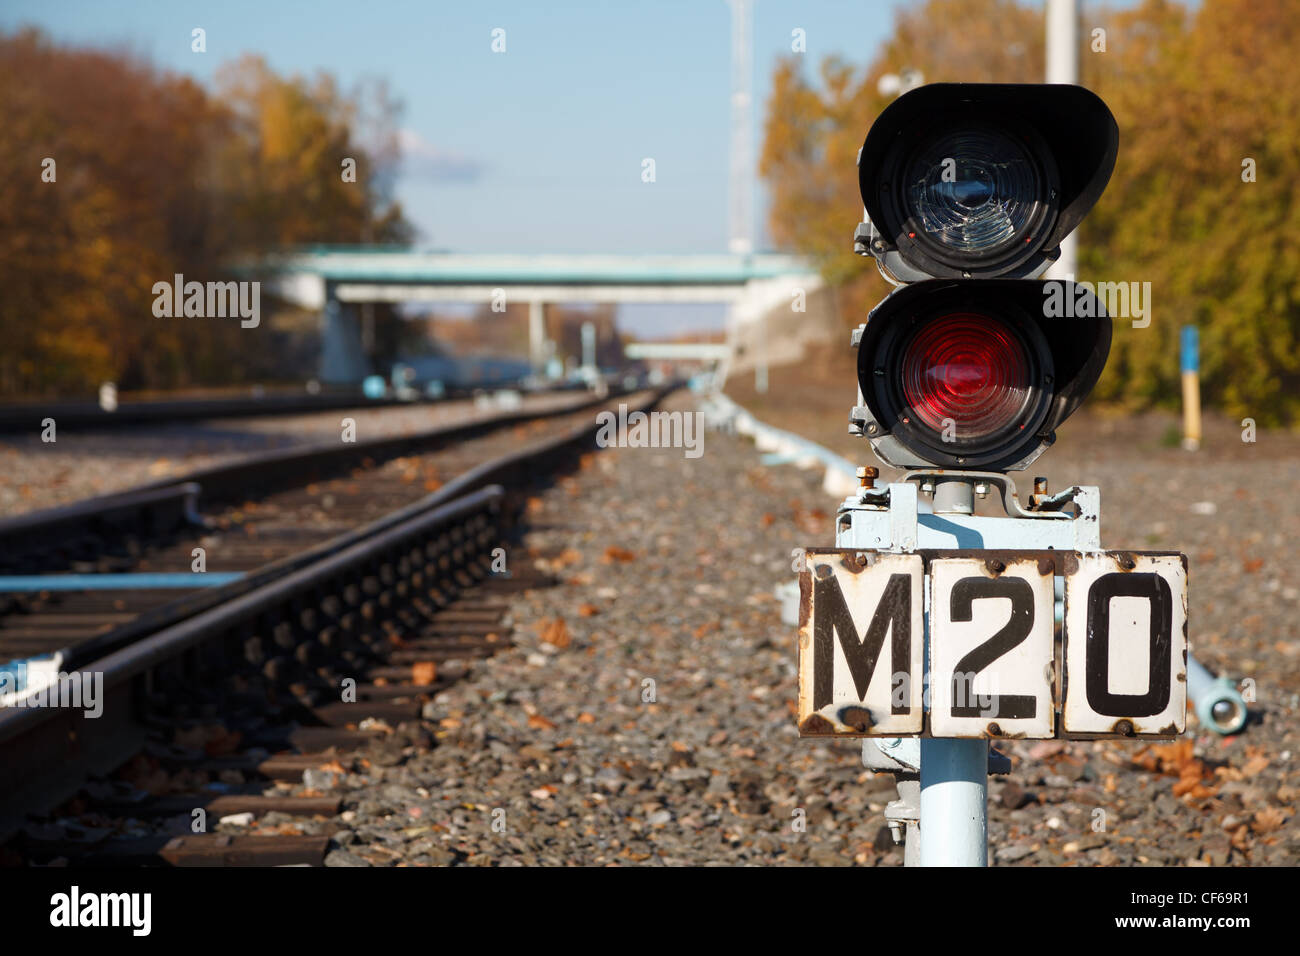 Traffic light shows red signal on railway. Railway station. Stock Photo